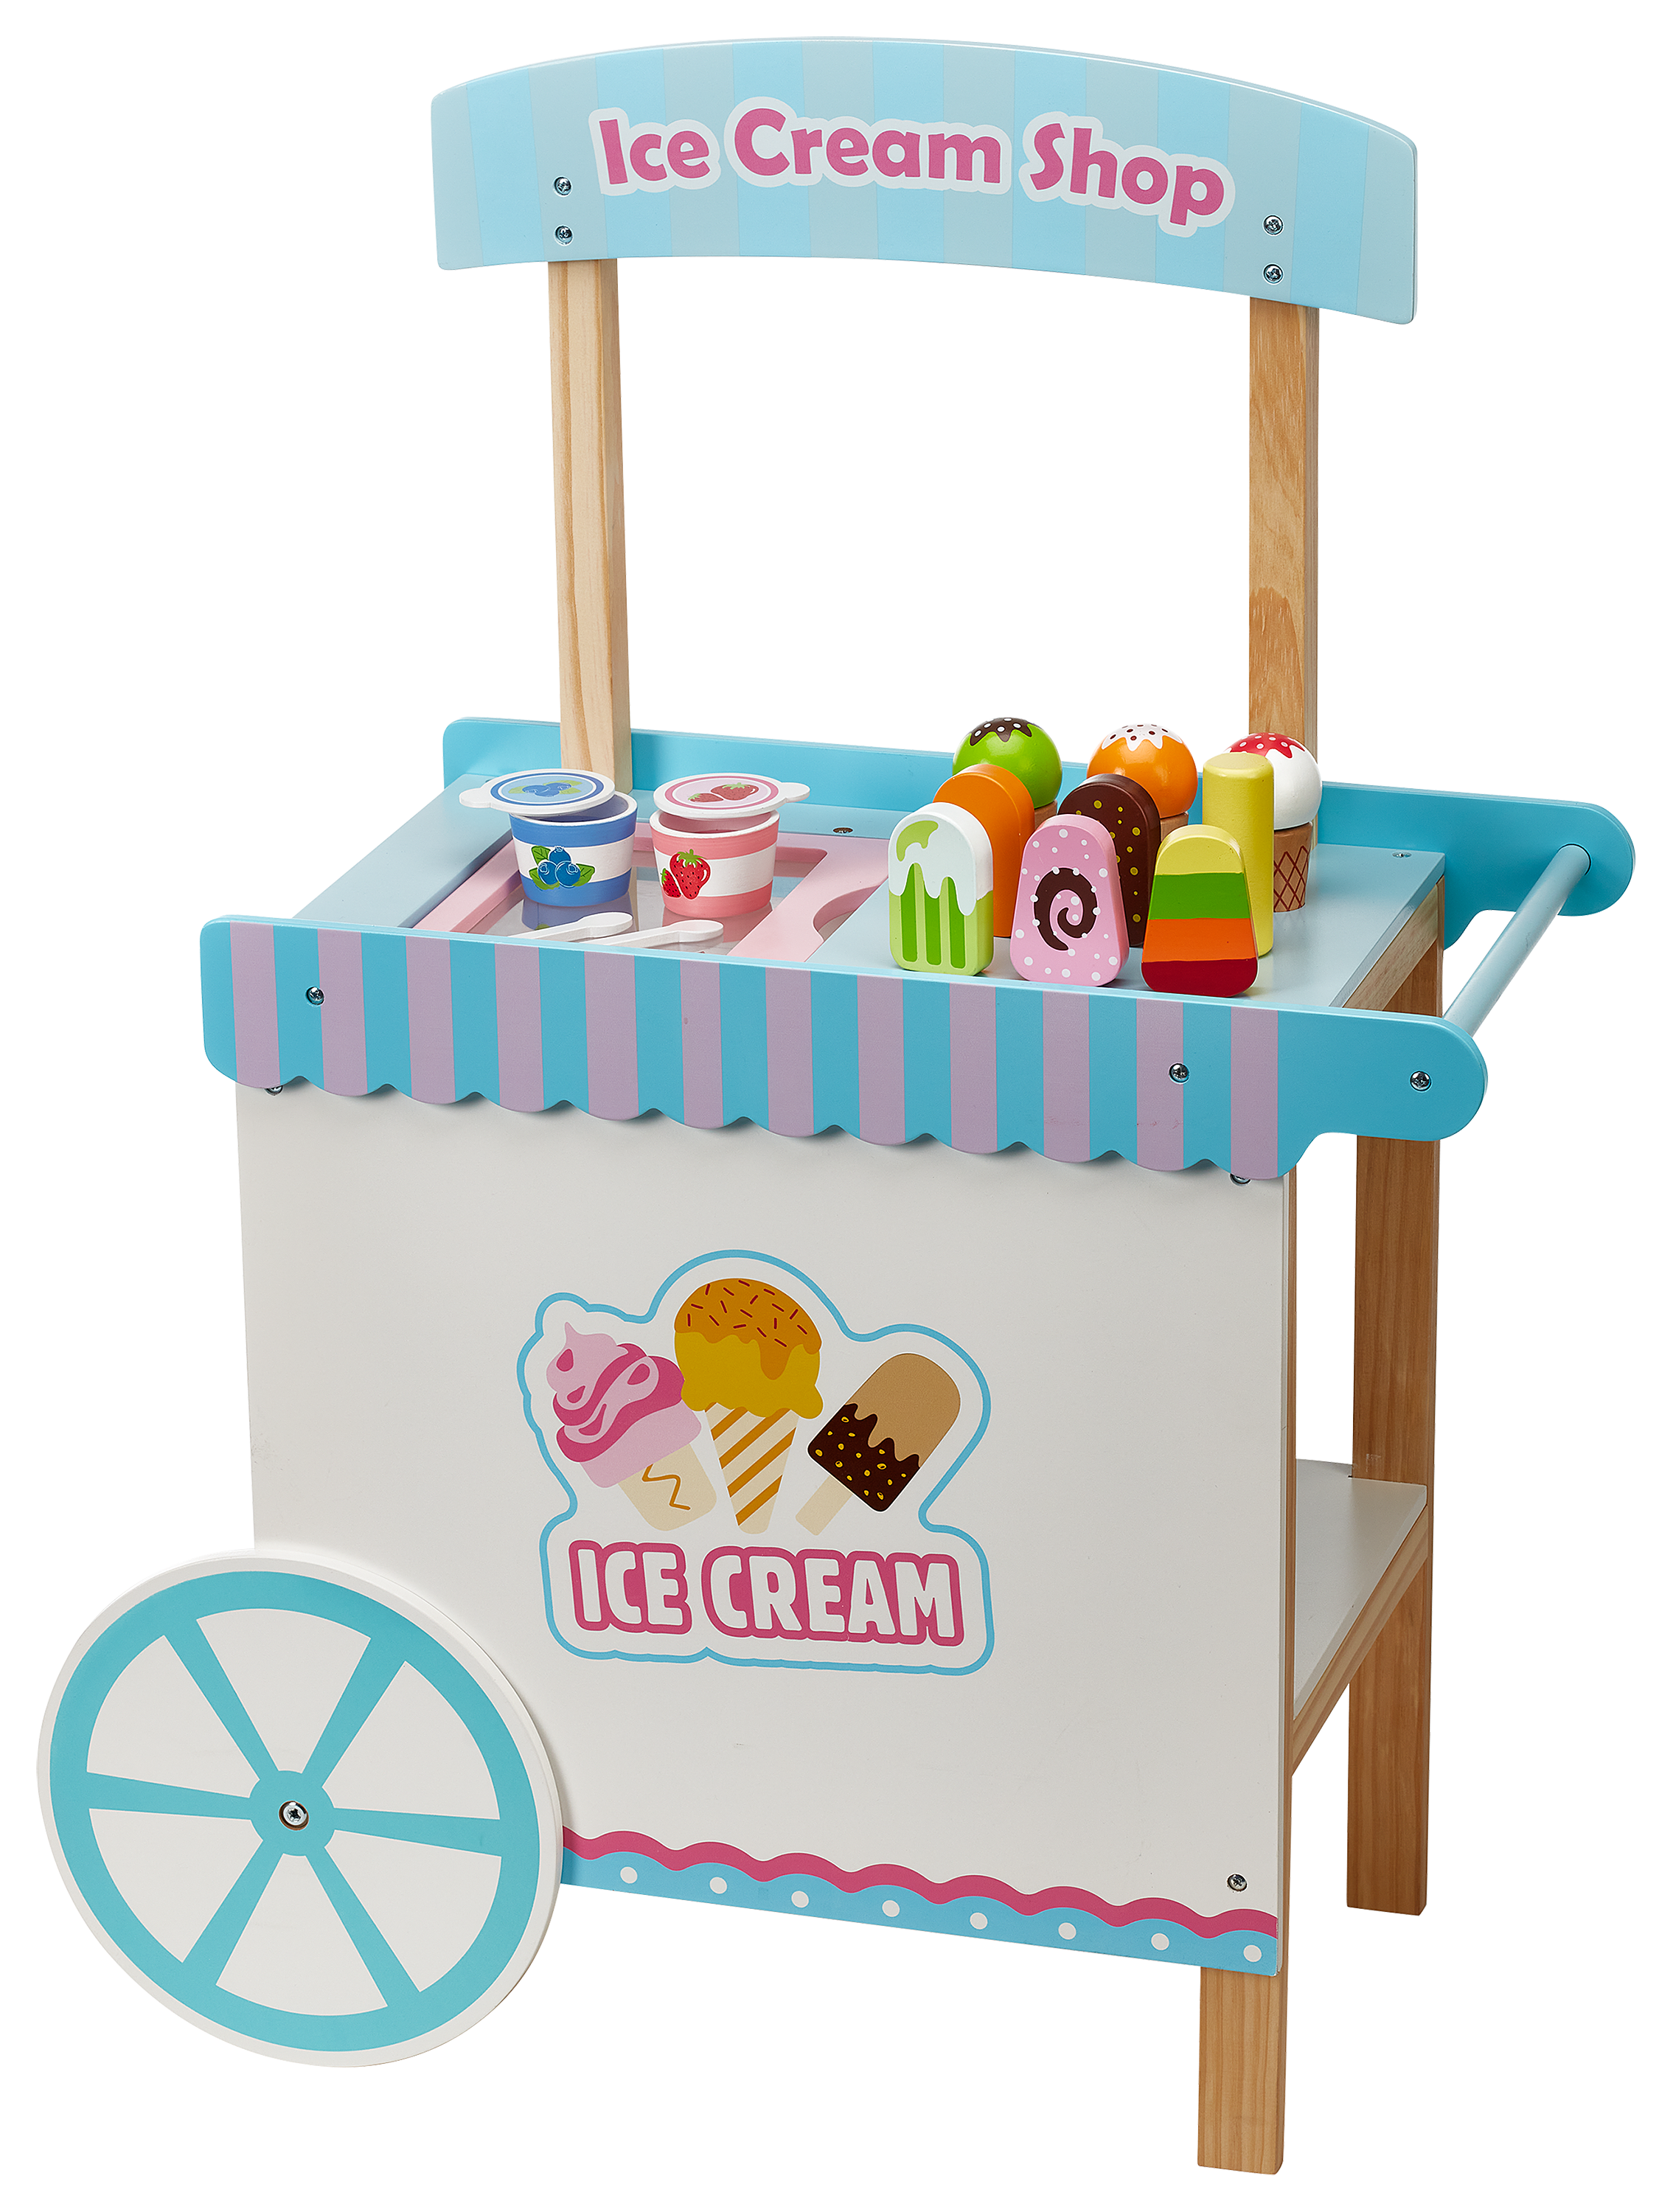 Bass Pro Shops Wooden Ice Cream Cart Set for Kids